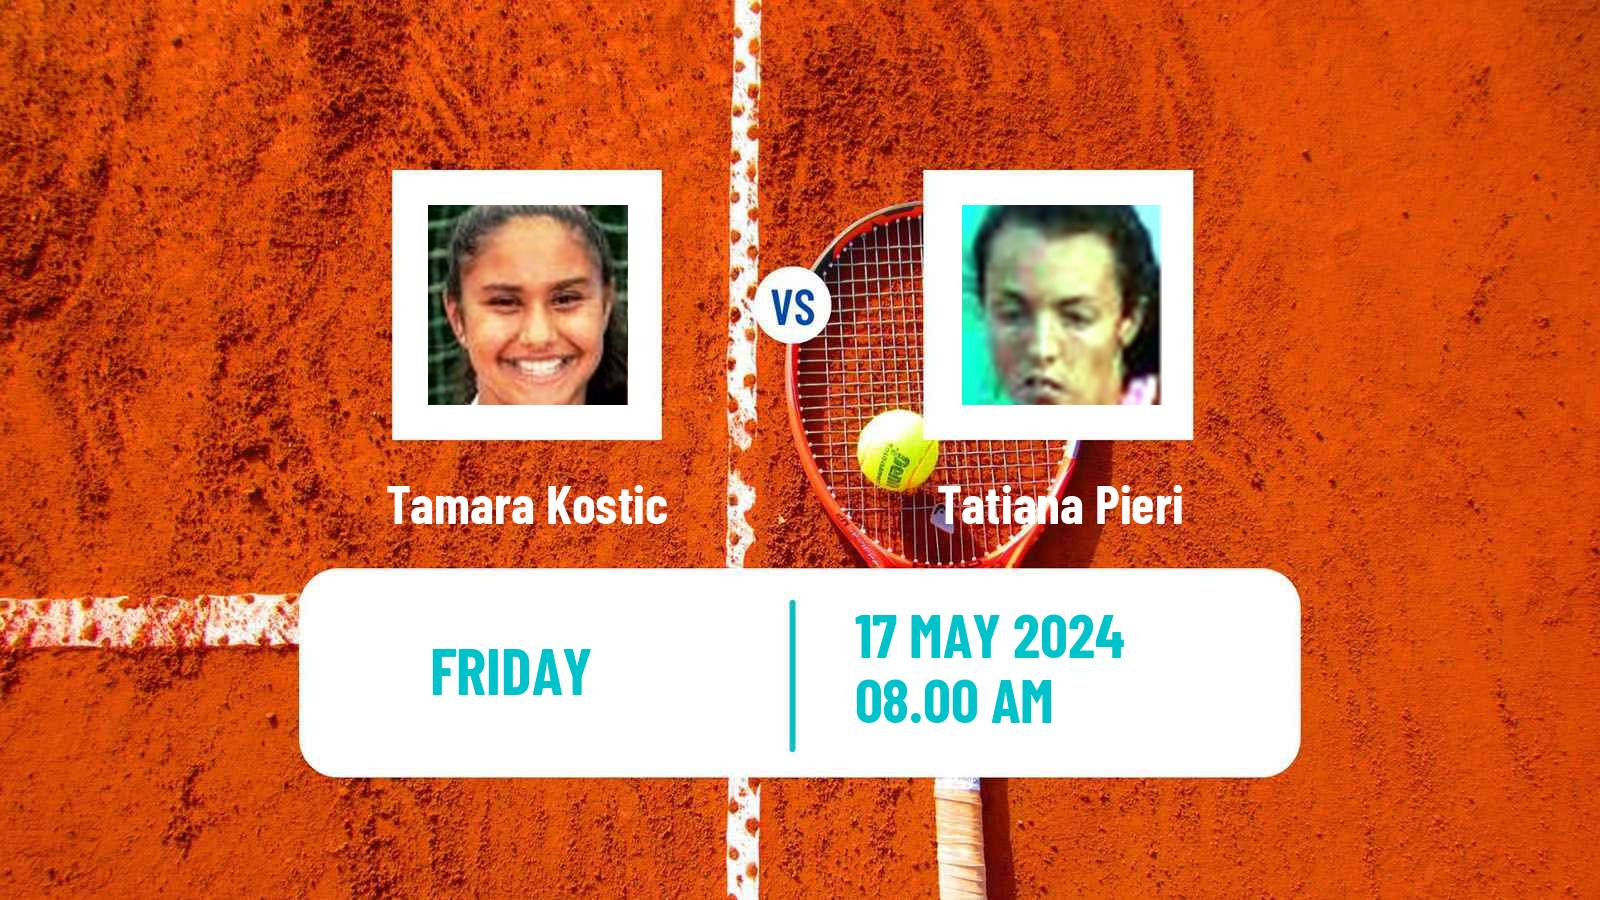 Tennis ITF W35 Villach Women Tamara Kostic - Tatiana Pieri